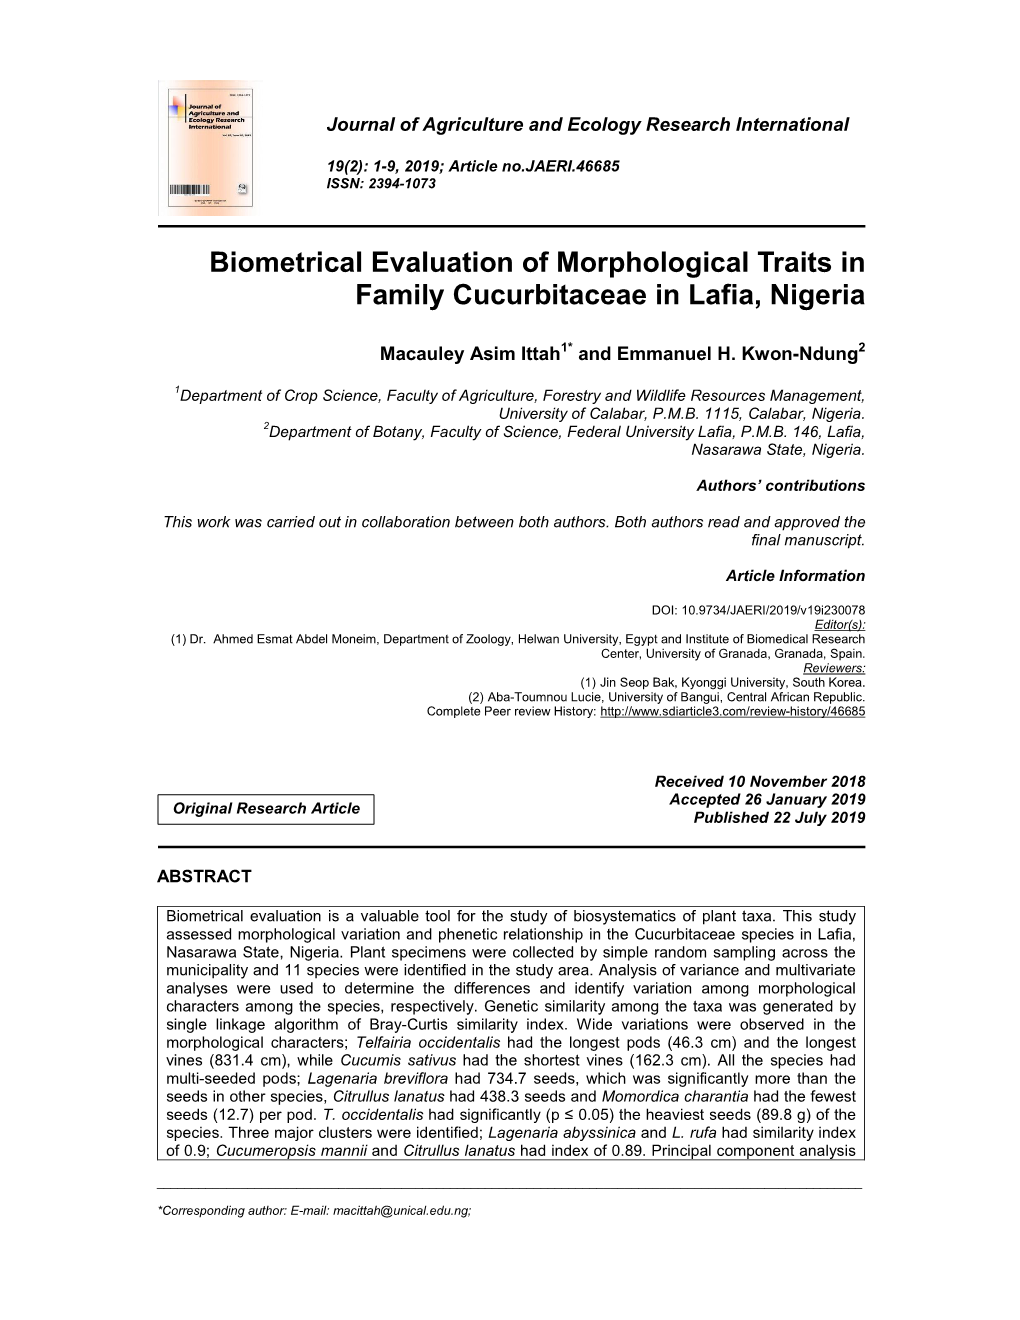 Biometrical Evaluation of Morphological Traits in Family Cucurbitaceae in Lafia, Nigeria